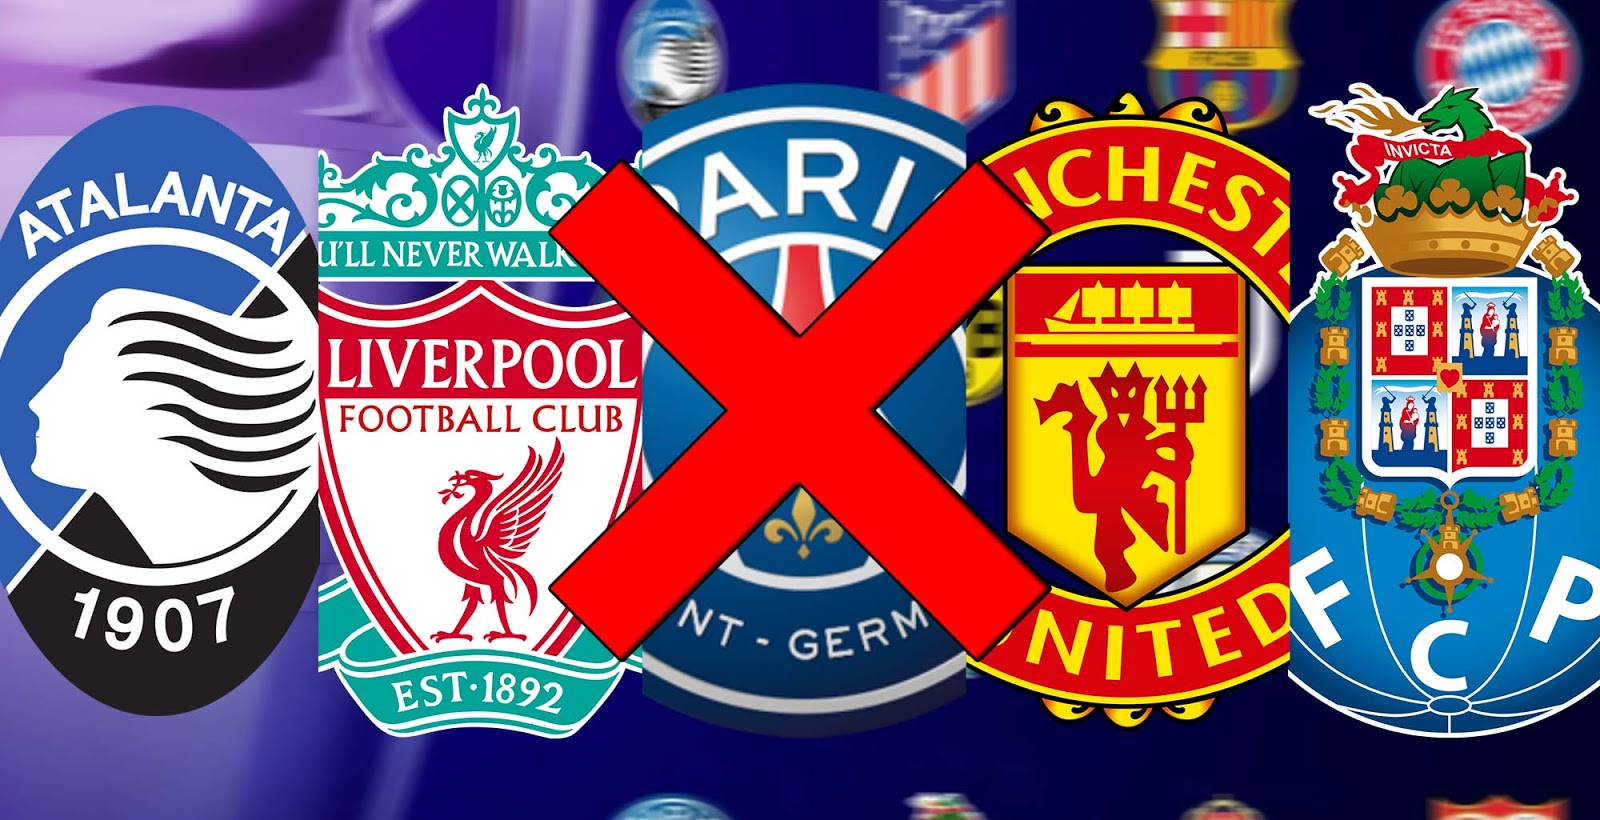 Champions league team logos! 